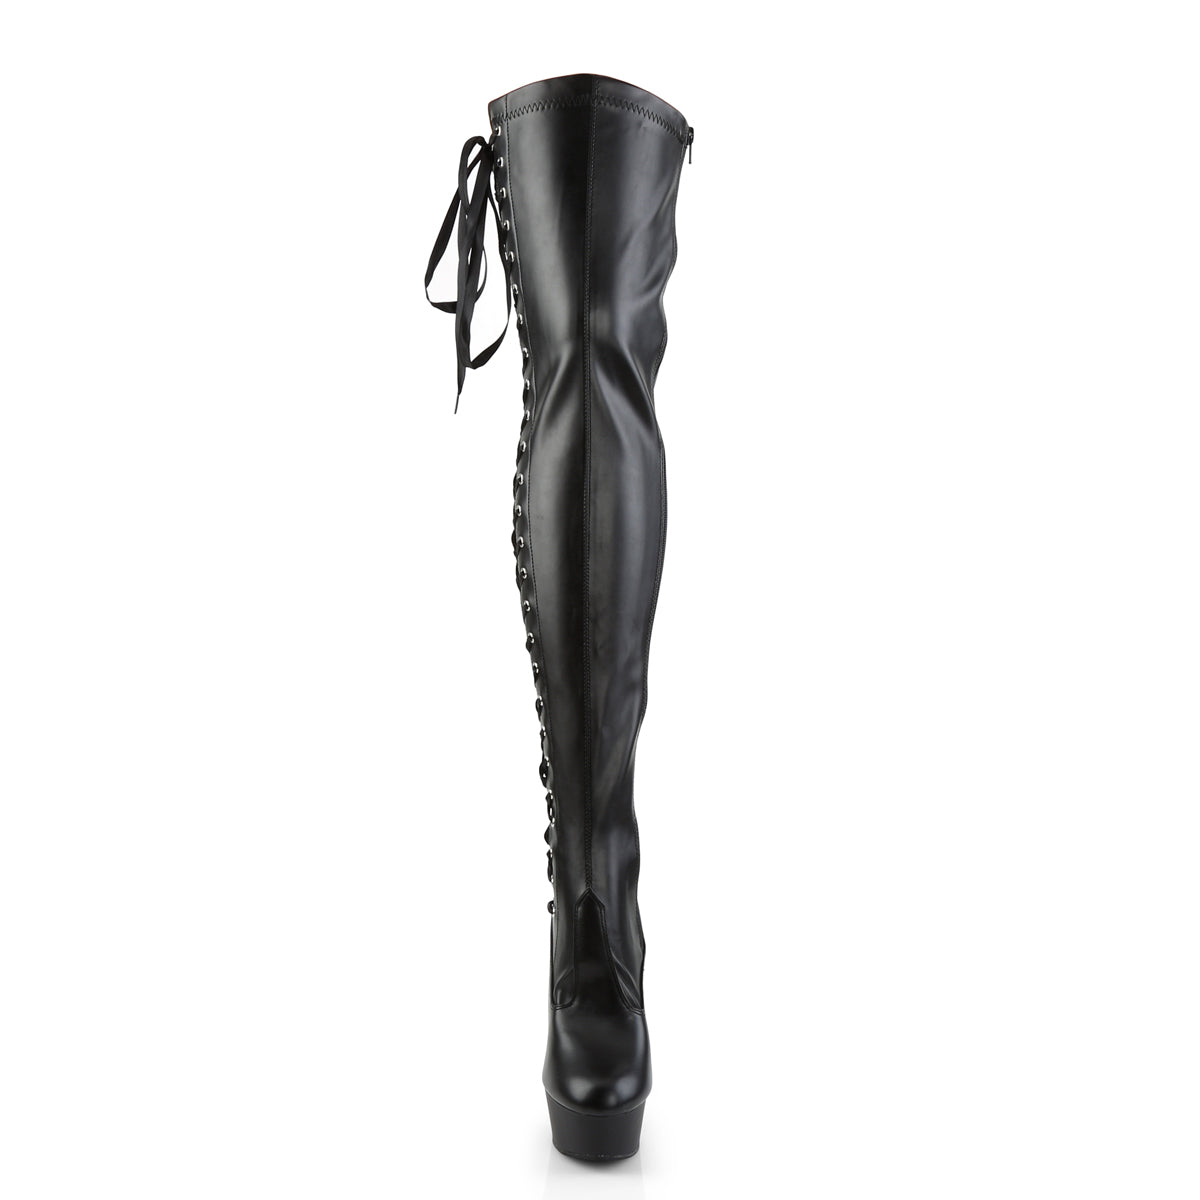 DELIGHT-3050 Pleaser 6 Inch Heel Black Pole Dancer Platforms-Pleaser- Sexy Shoes Alternative Footwear